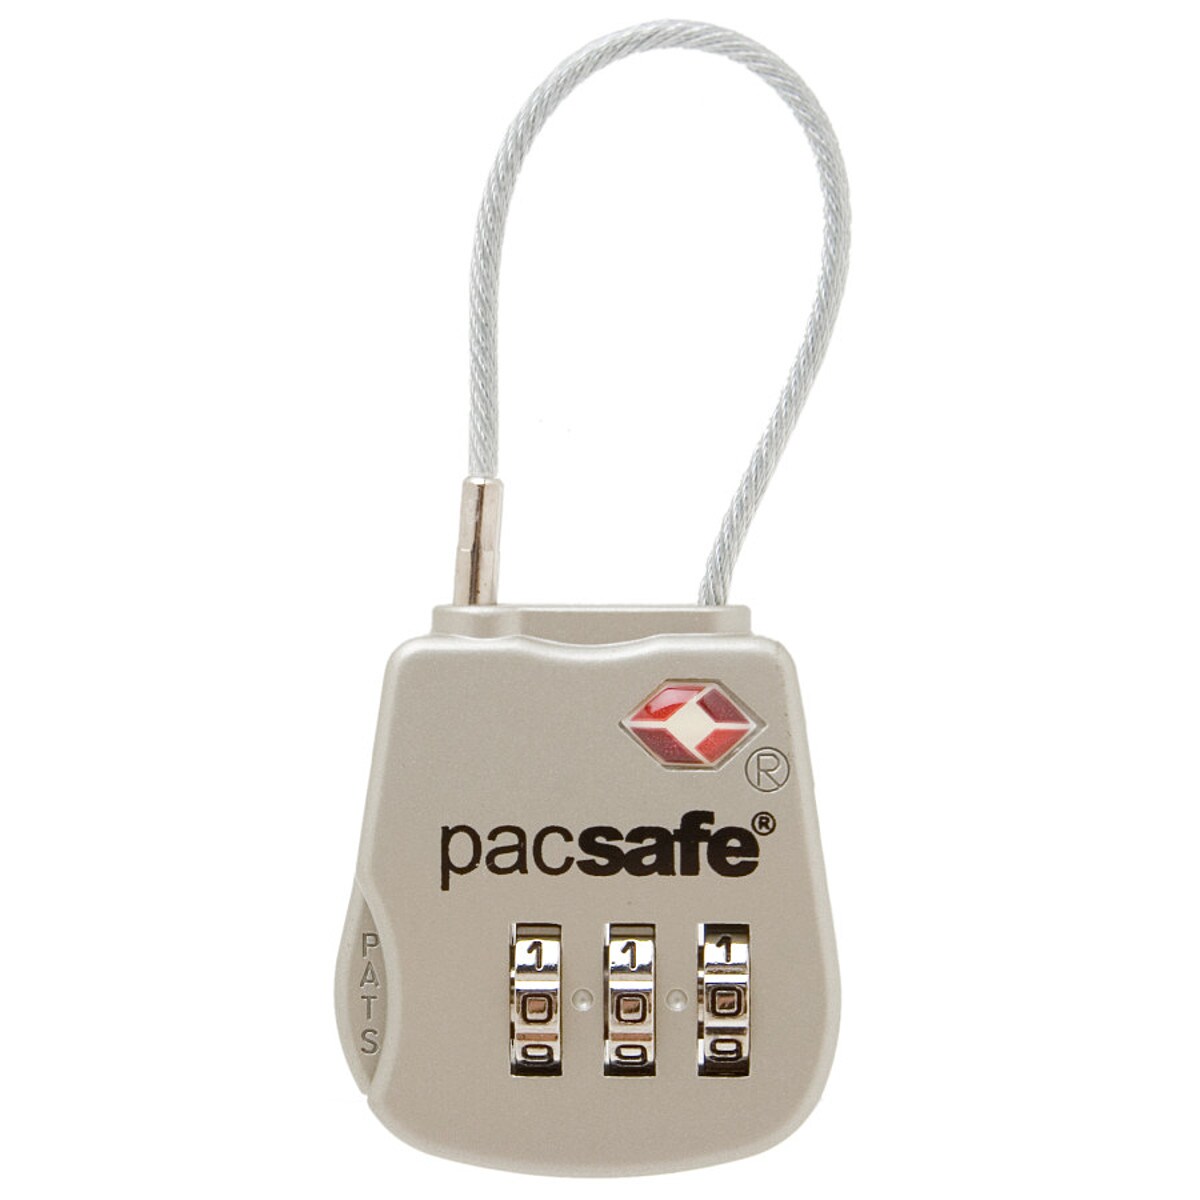 Pacsafe ProSafe 800 3-Dial Cable Lock